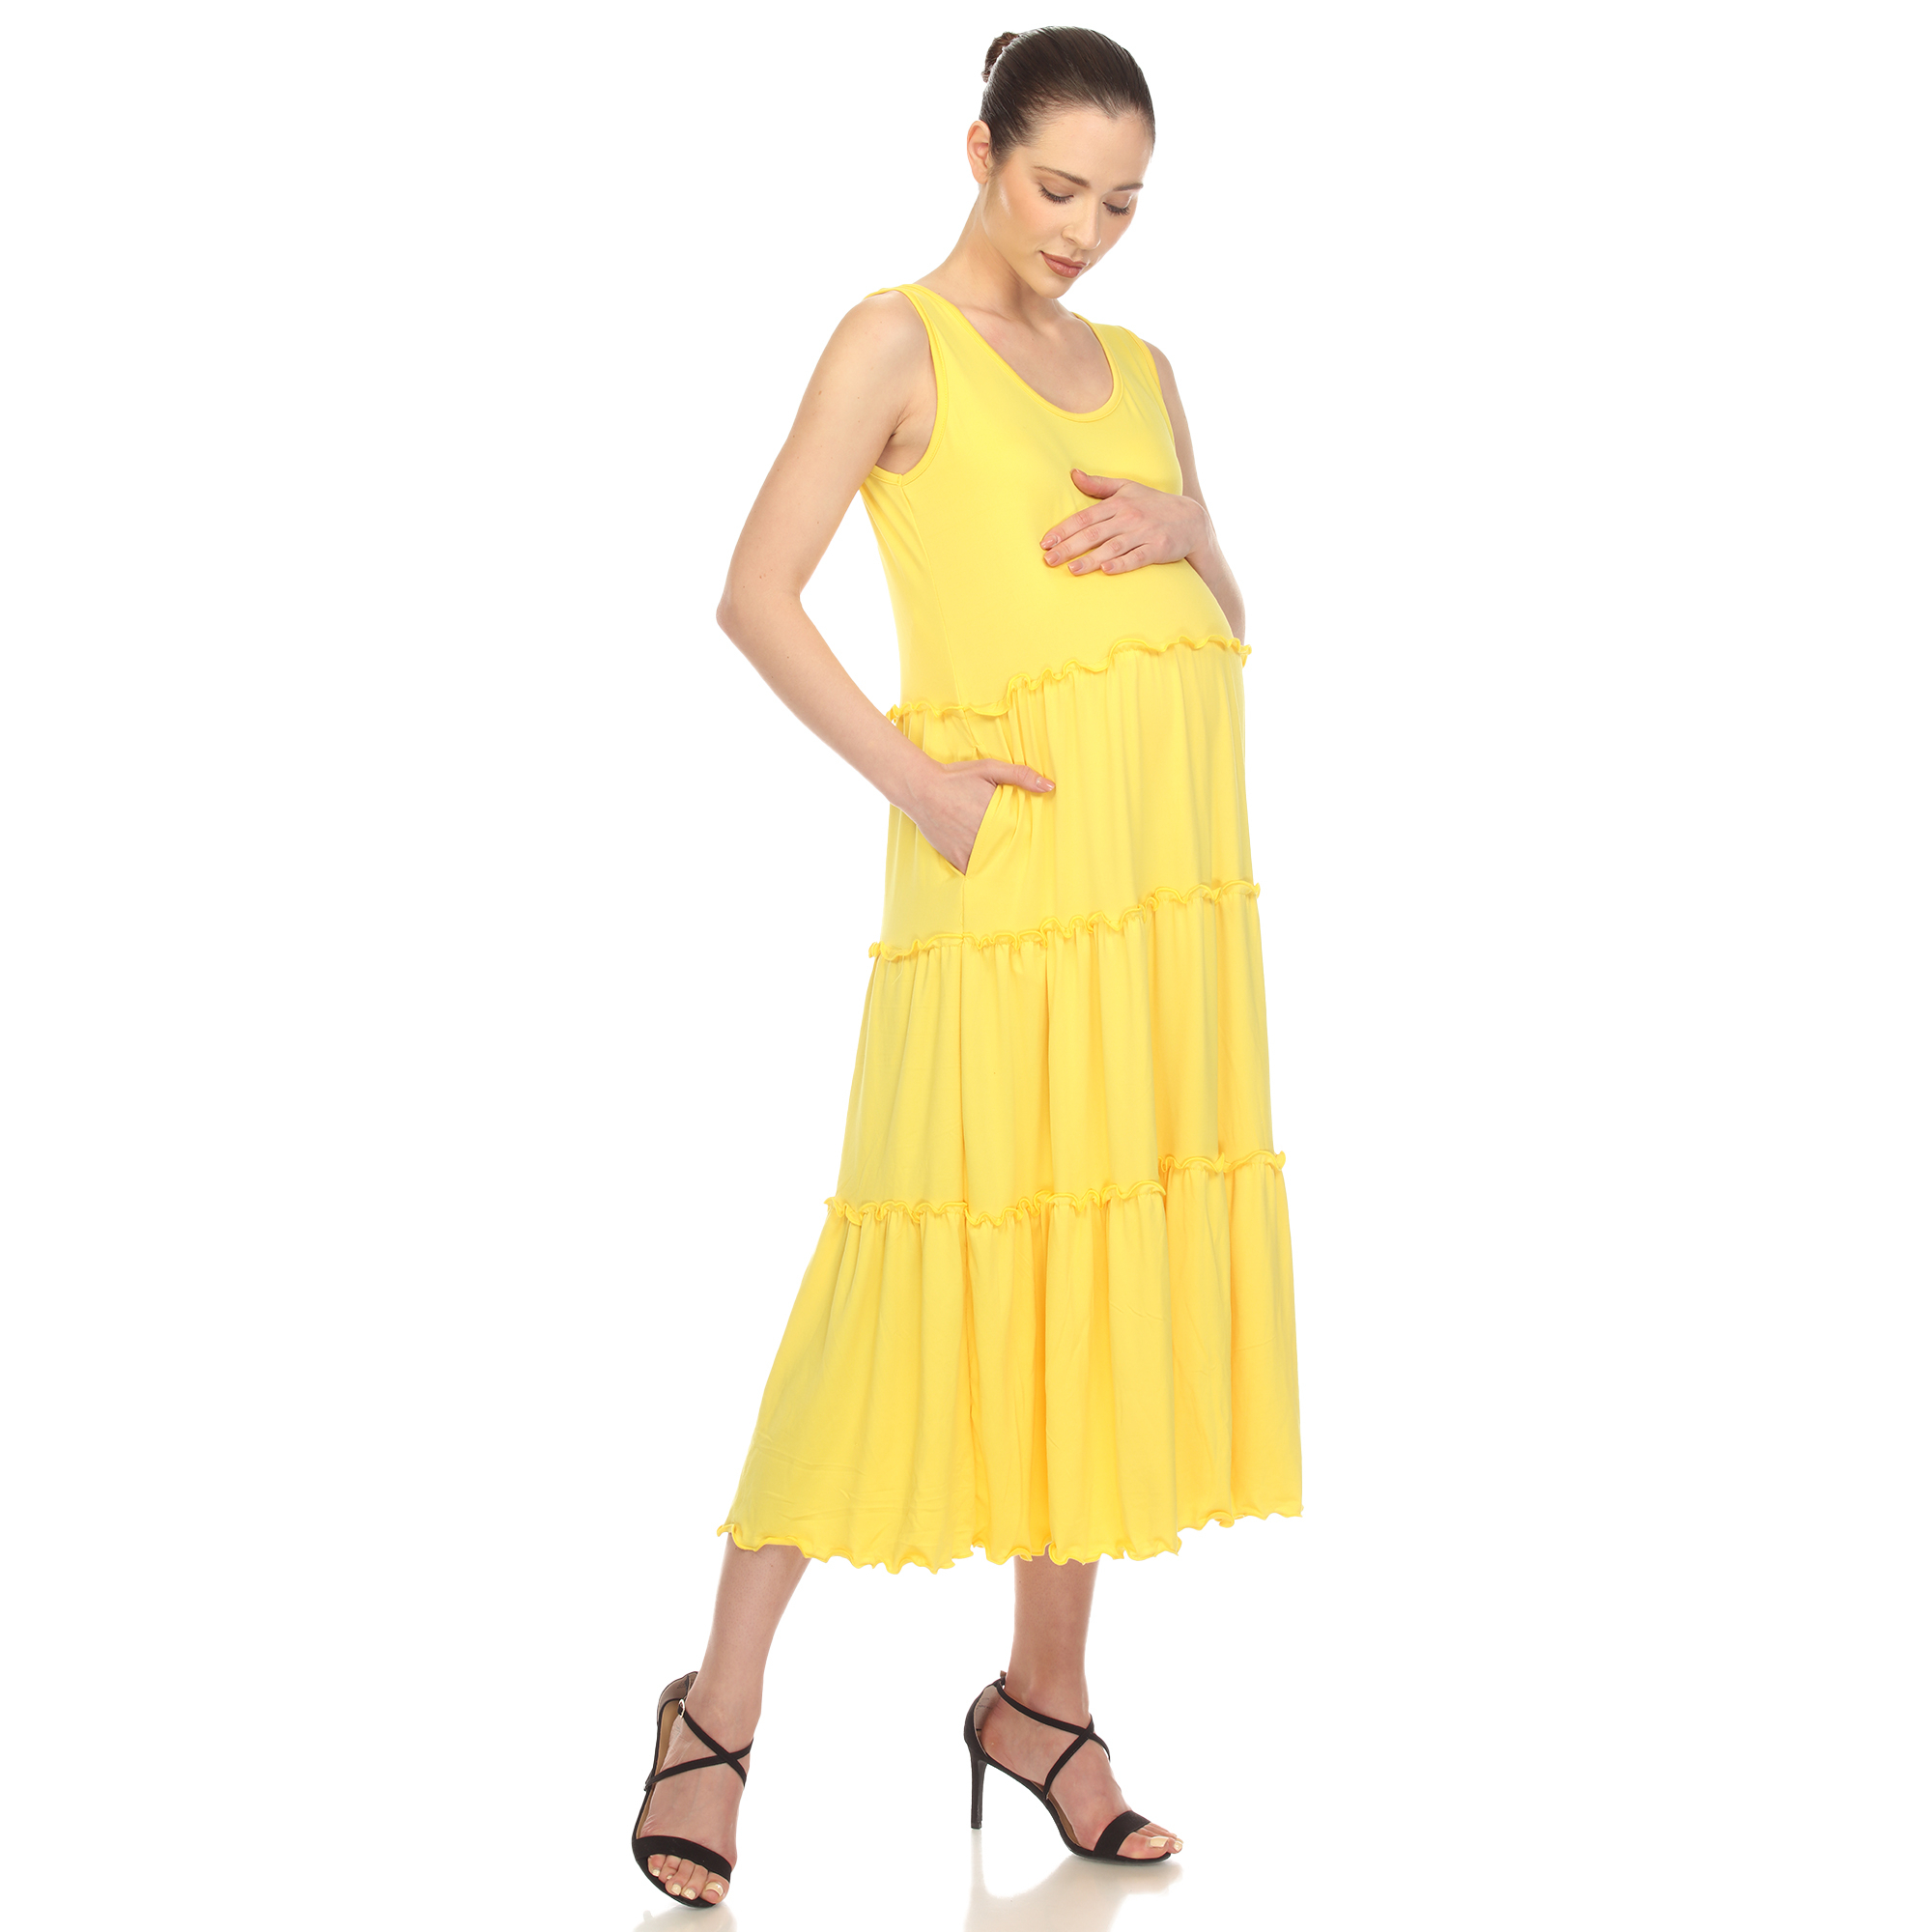 White Mark Women's Maternity Scoop Neck Tiered Midi Dress - Canary Yellow, 1X